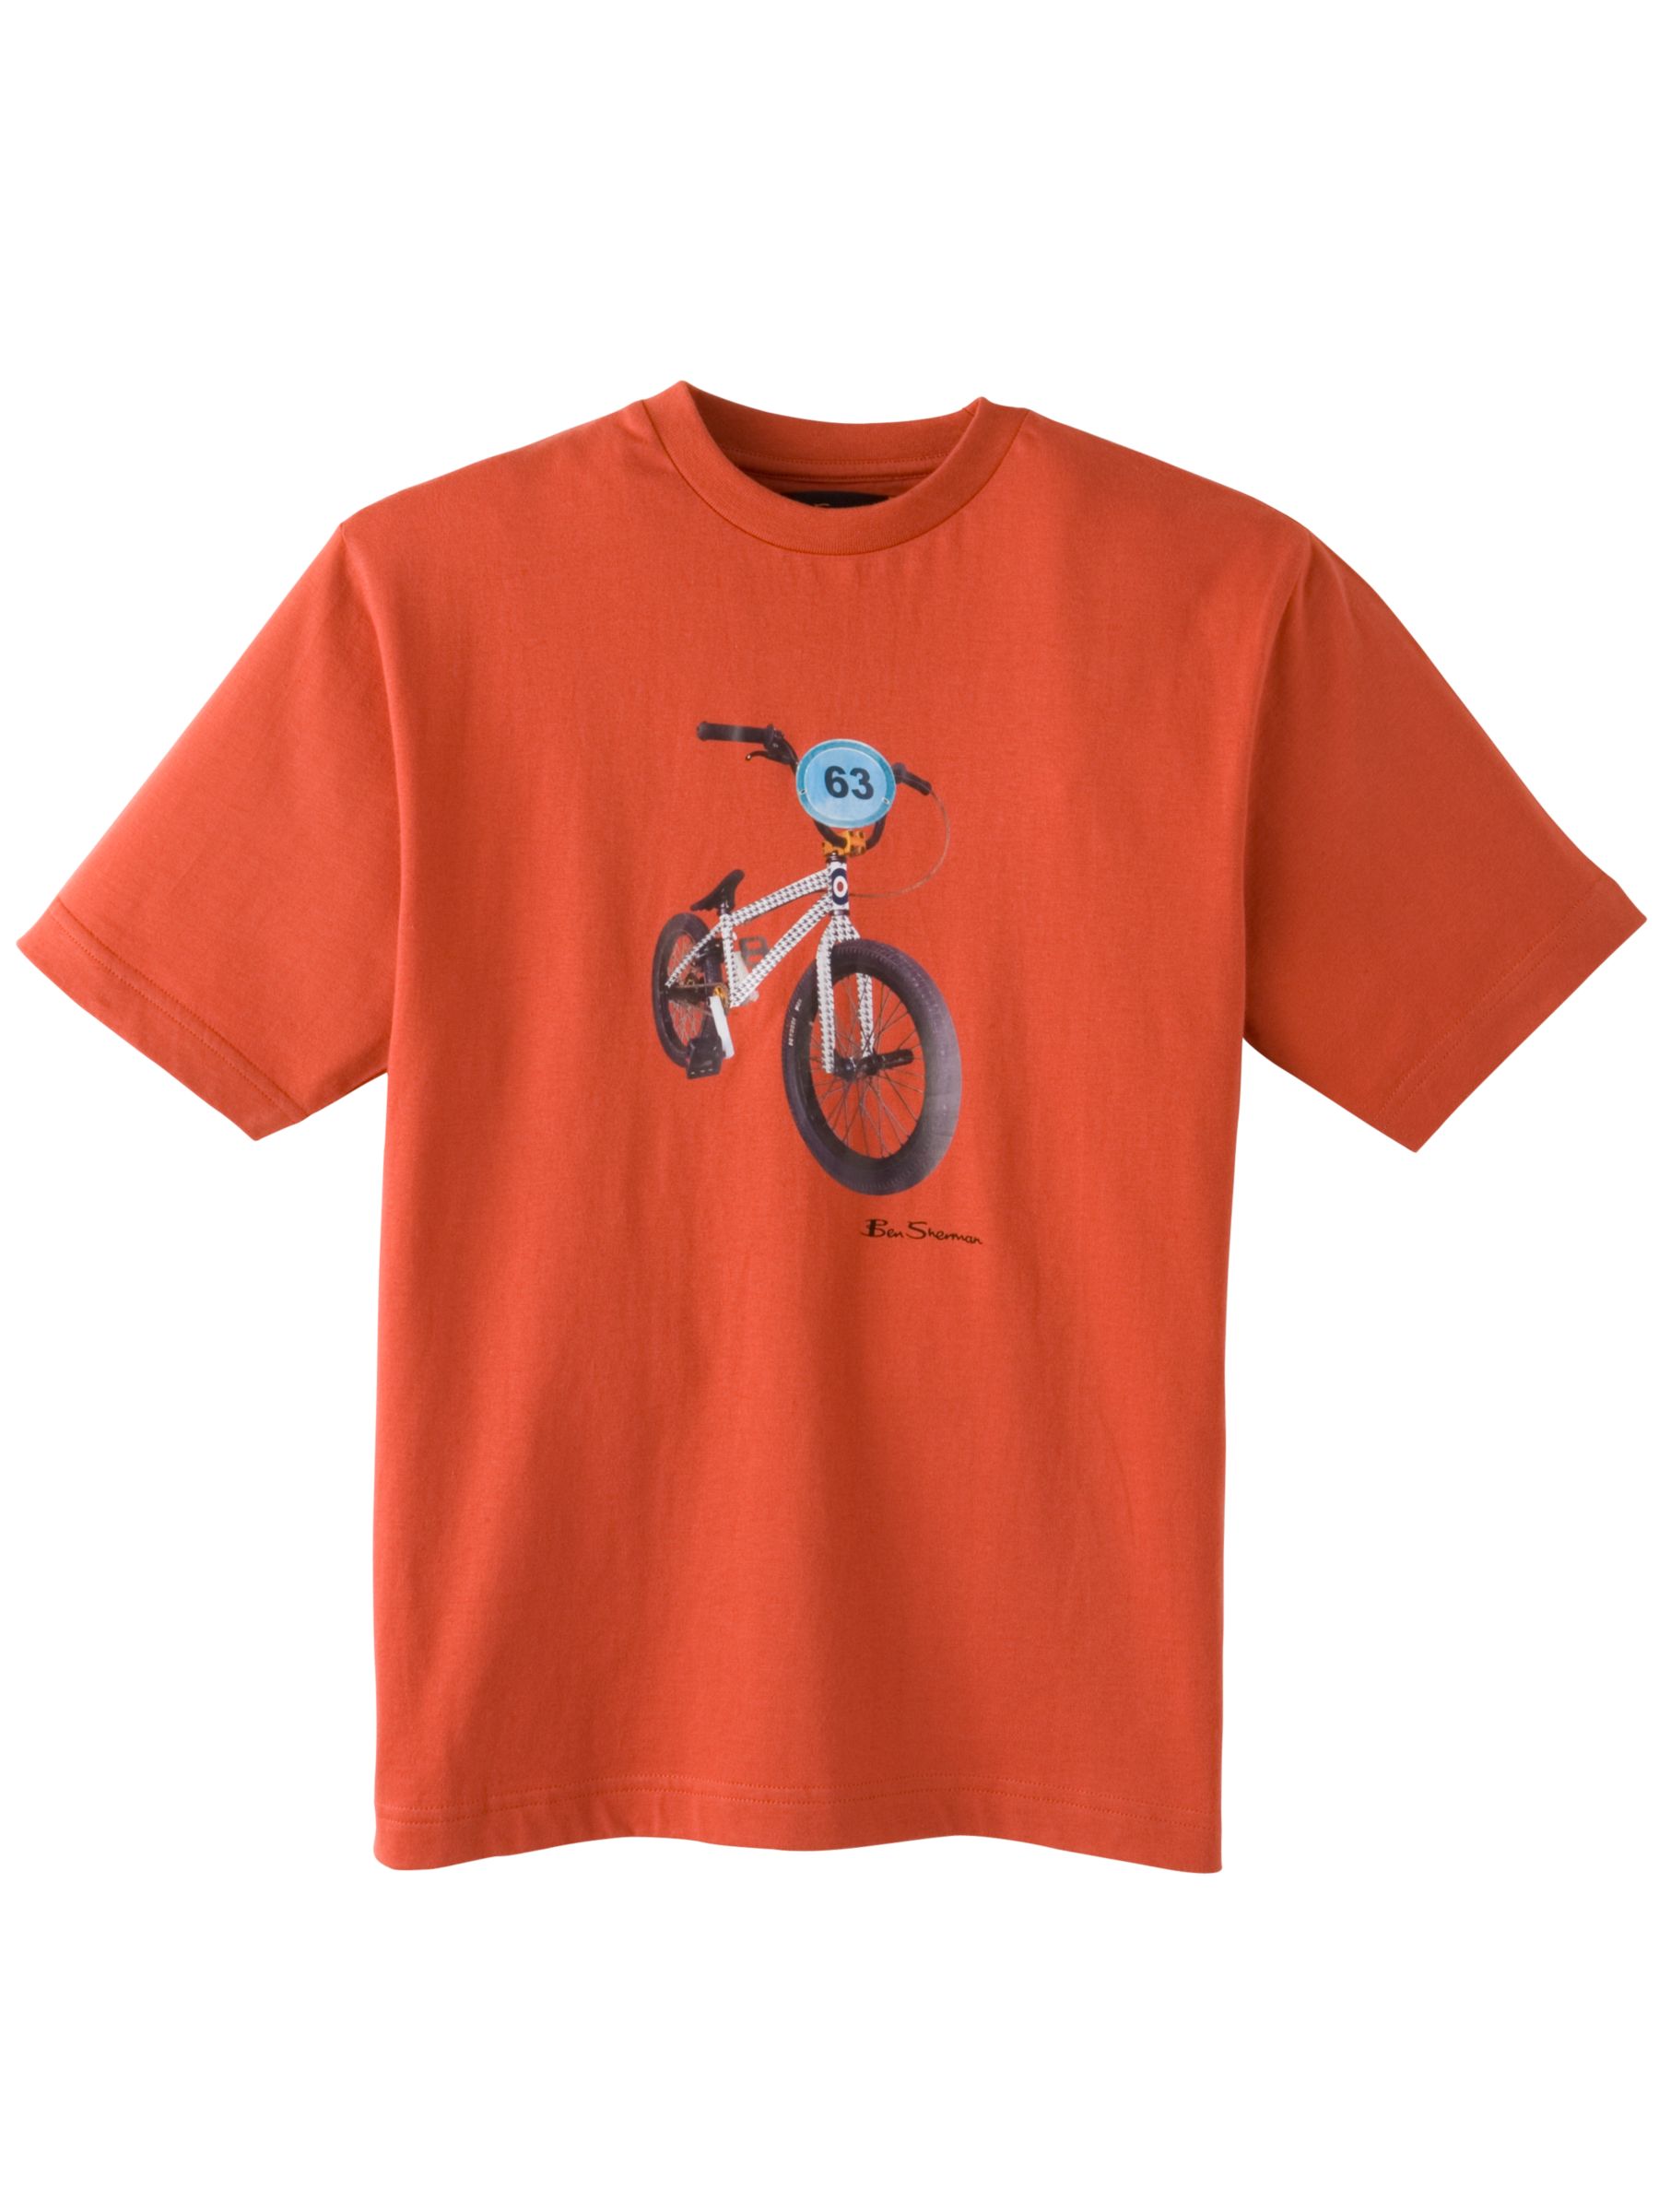 Ben Sherman Dennis T-Shirt, Rust, 11-12